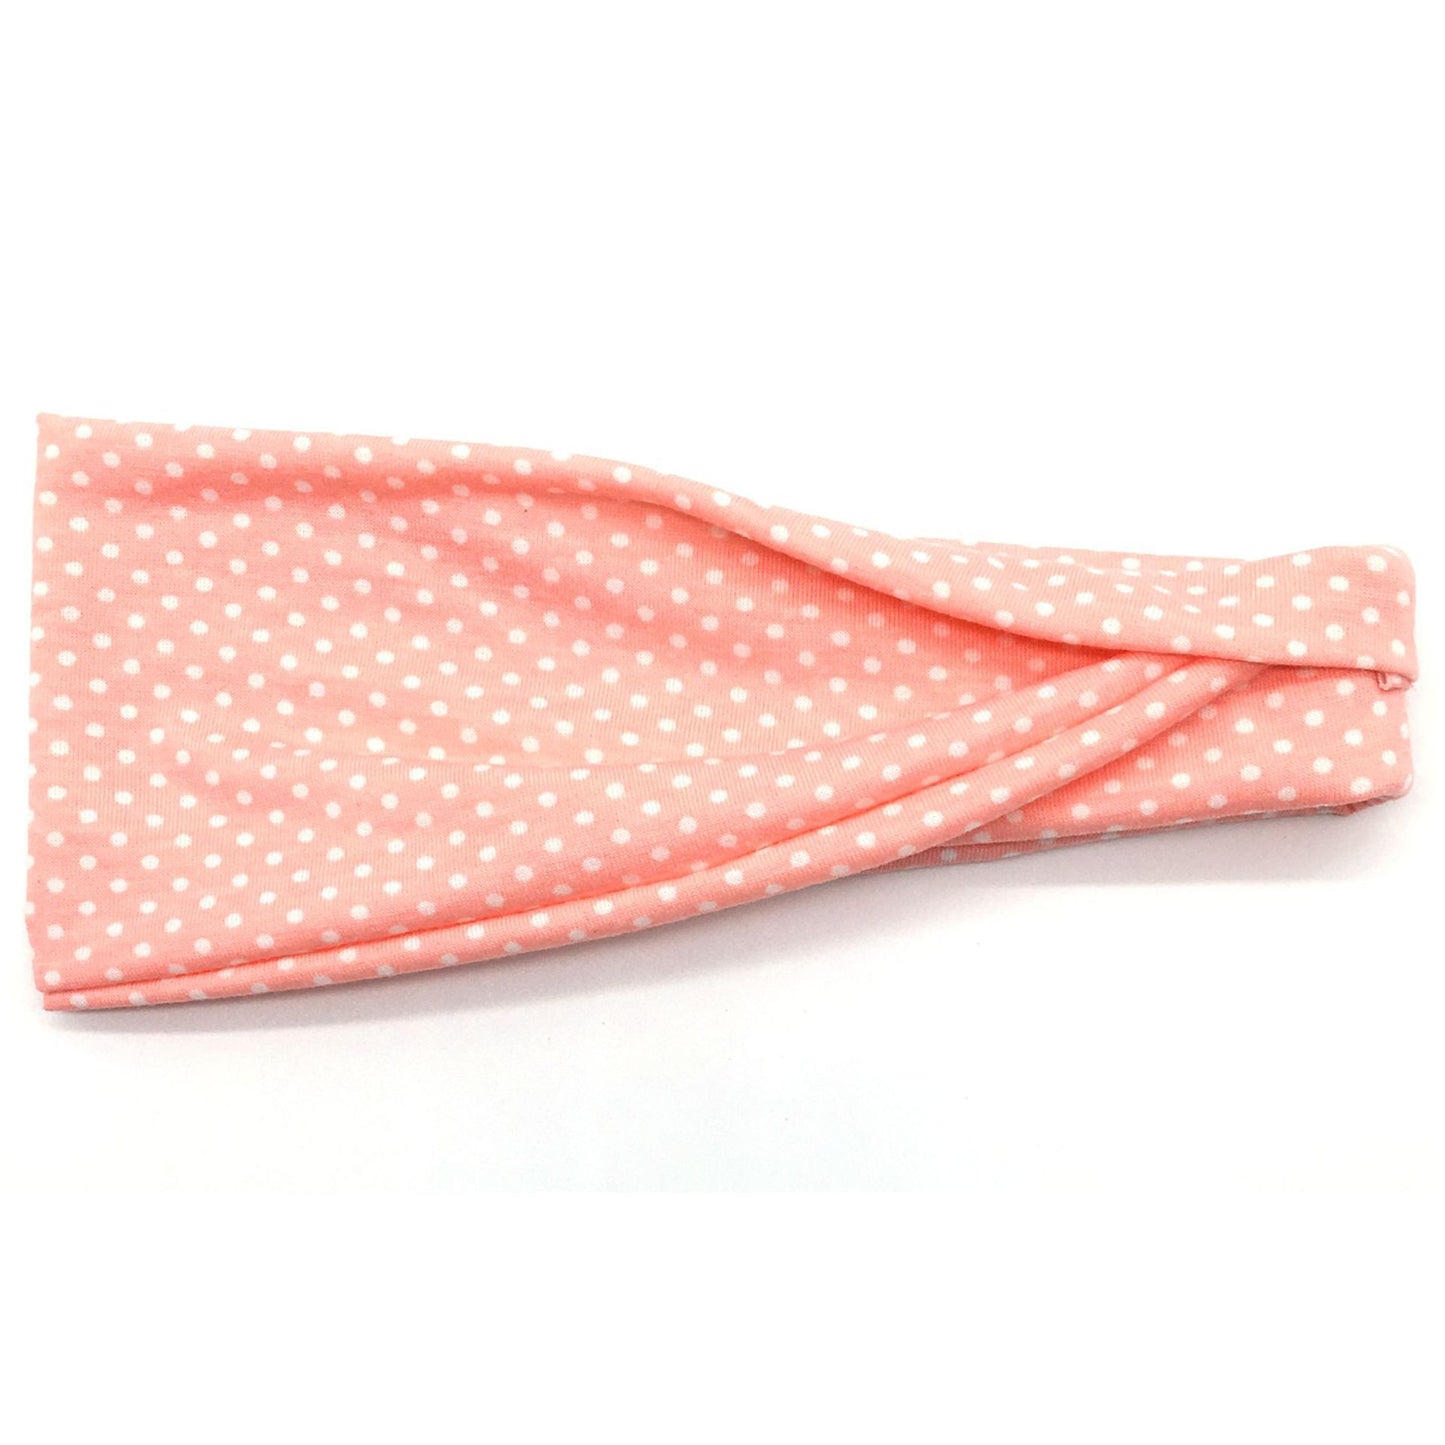 Soft cotton printed sporty bandanna headband